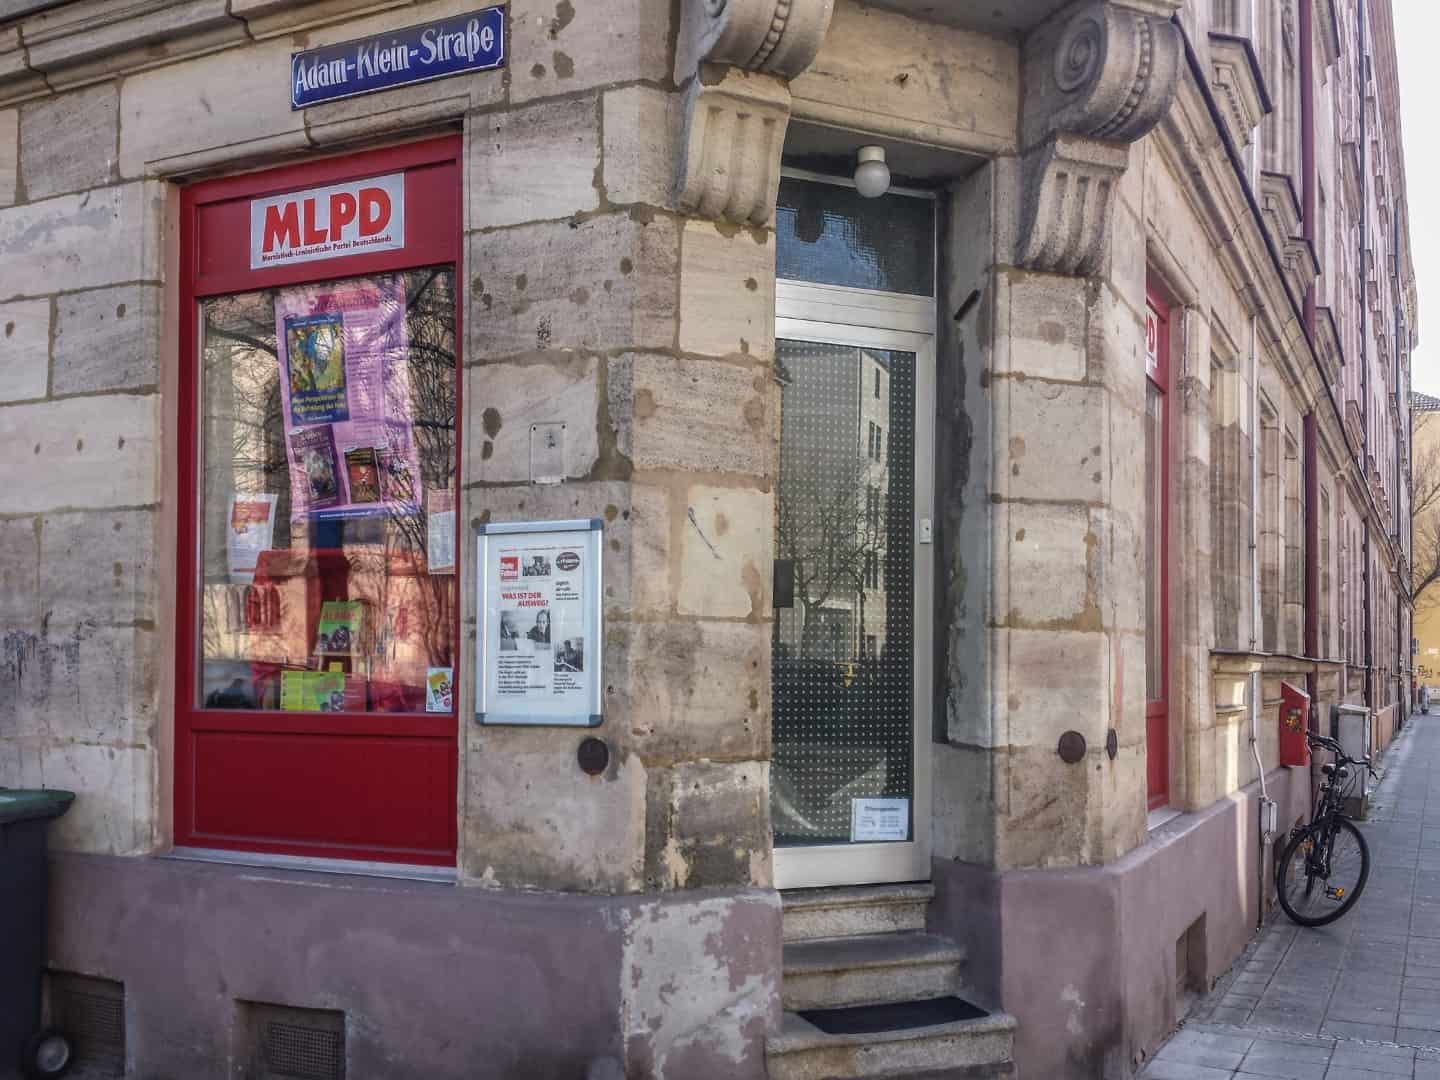 MPLD-Büro in Nürnberg-Gostenhof (Archivbild)